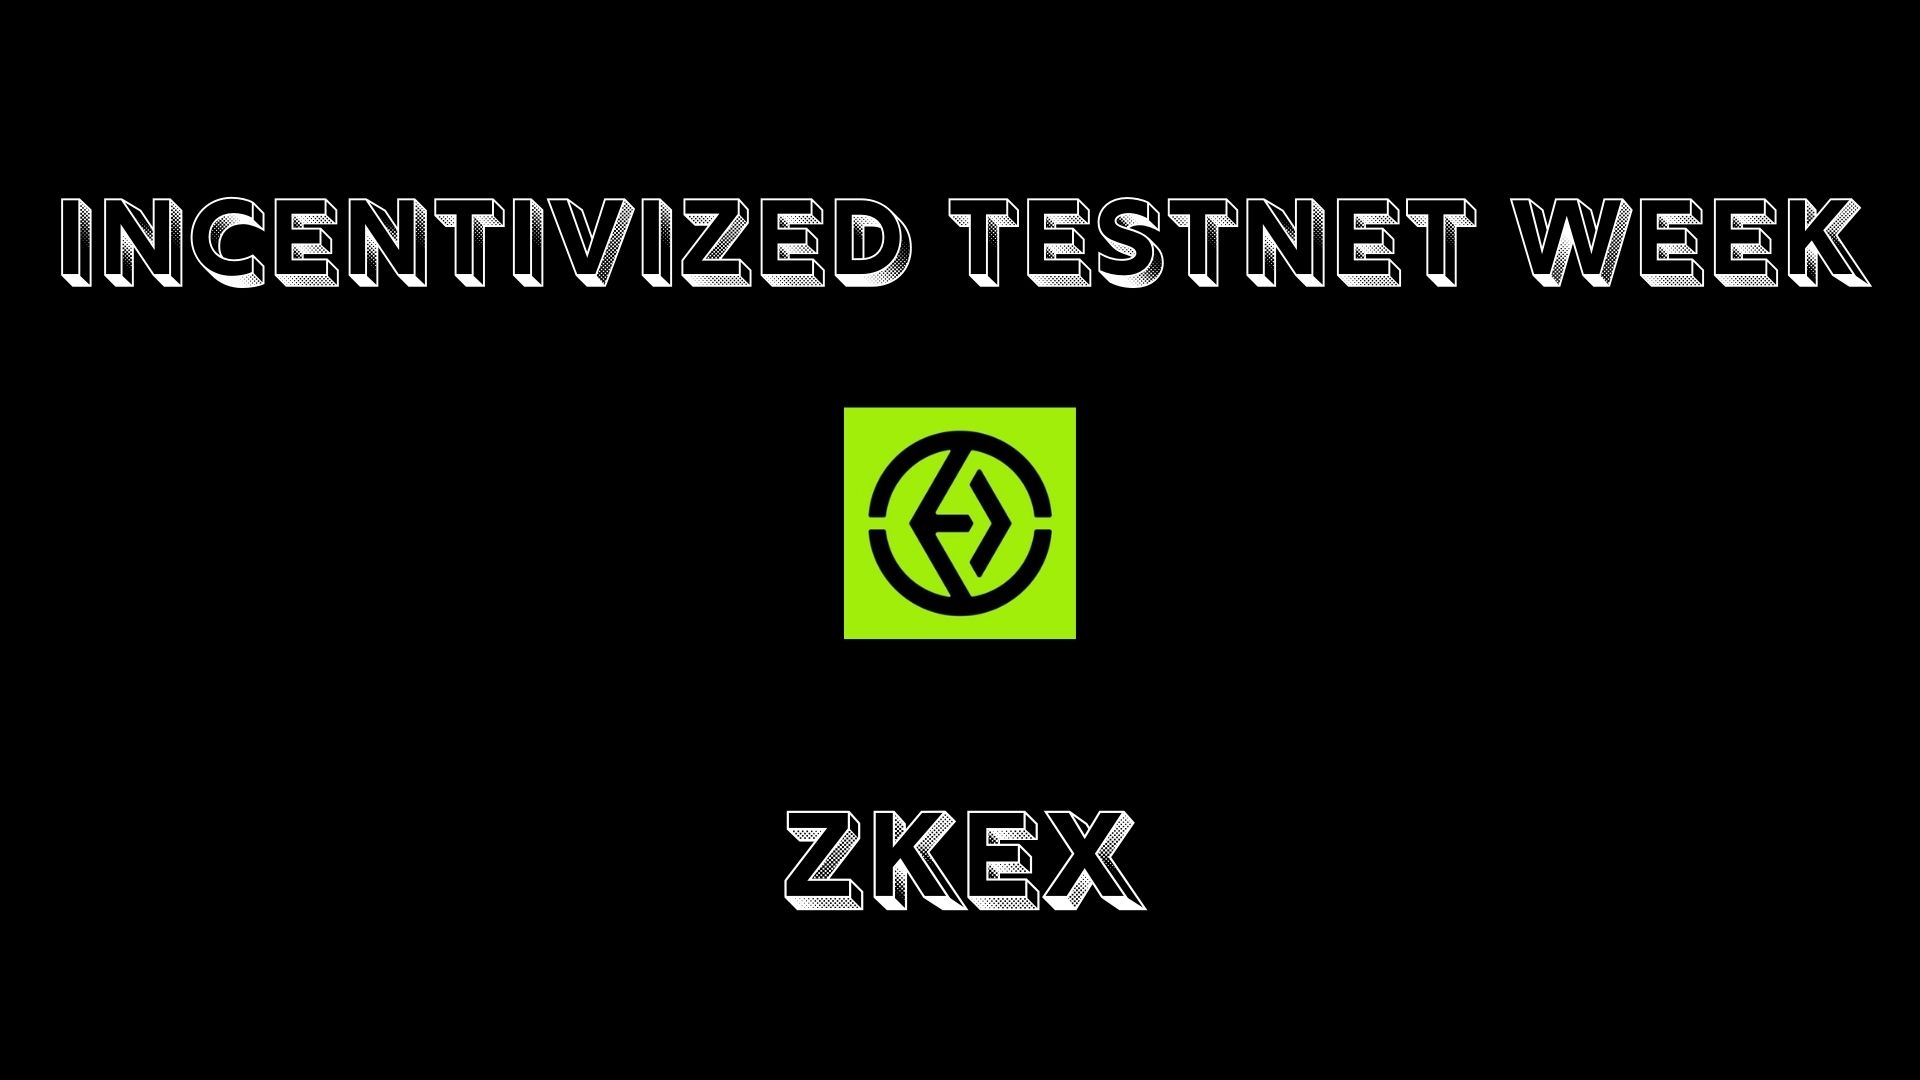 @jerrythefarmer/incentivized-testnet-week-day-2-zkex